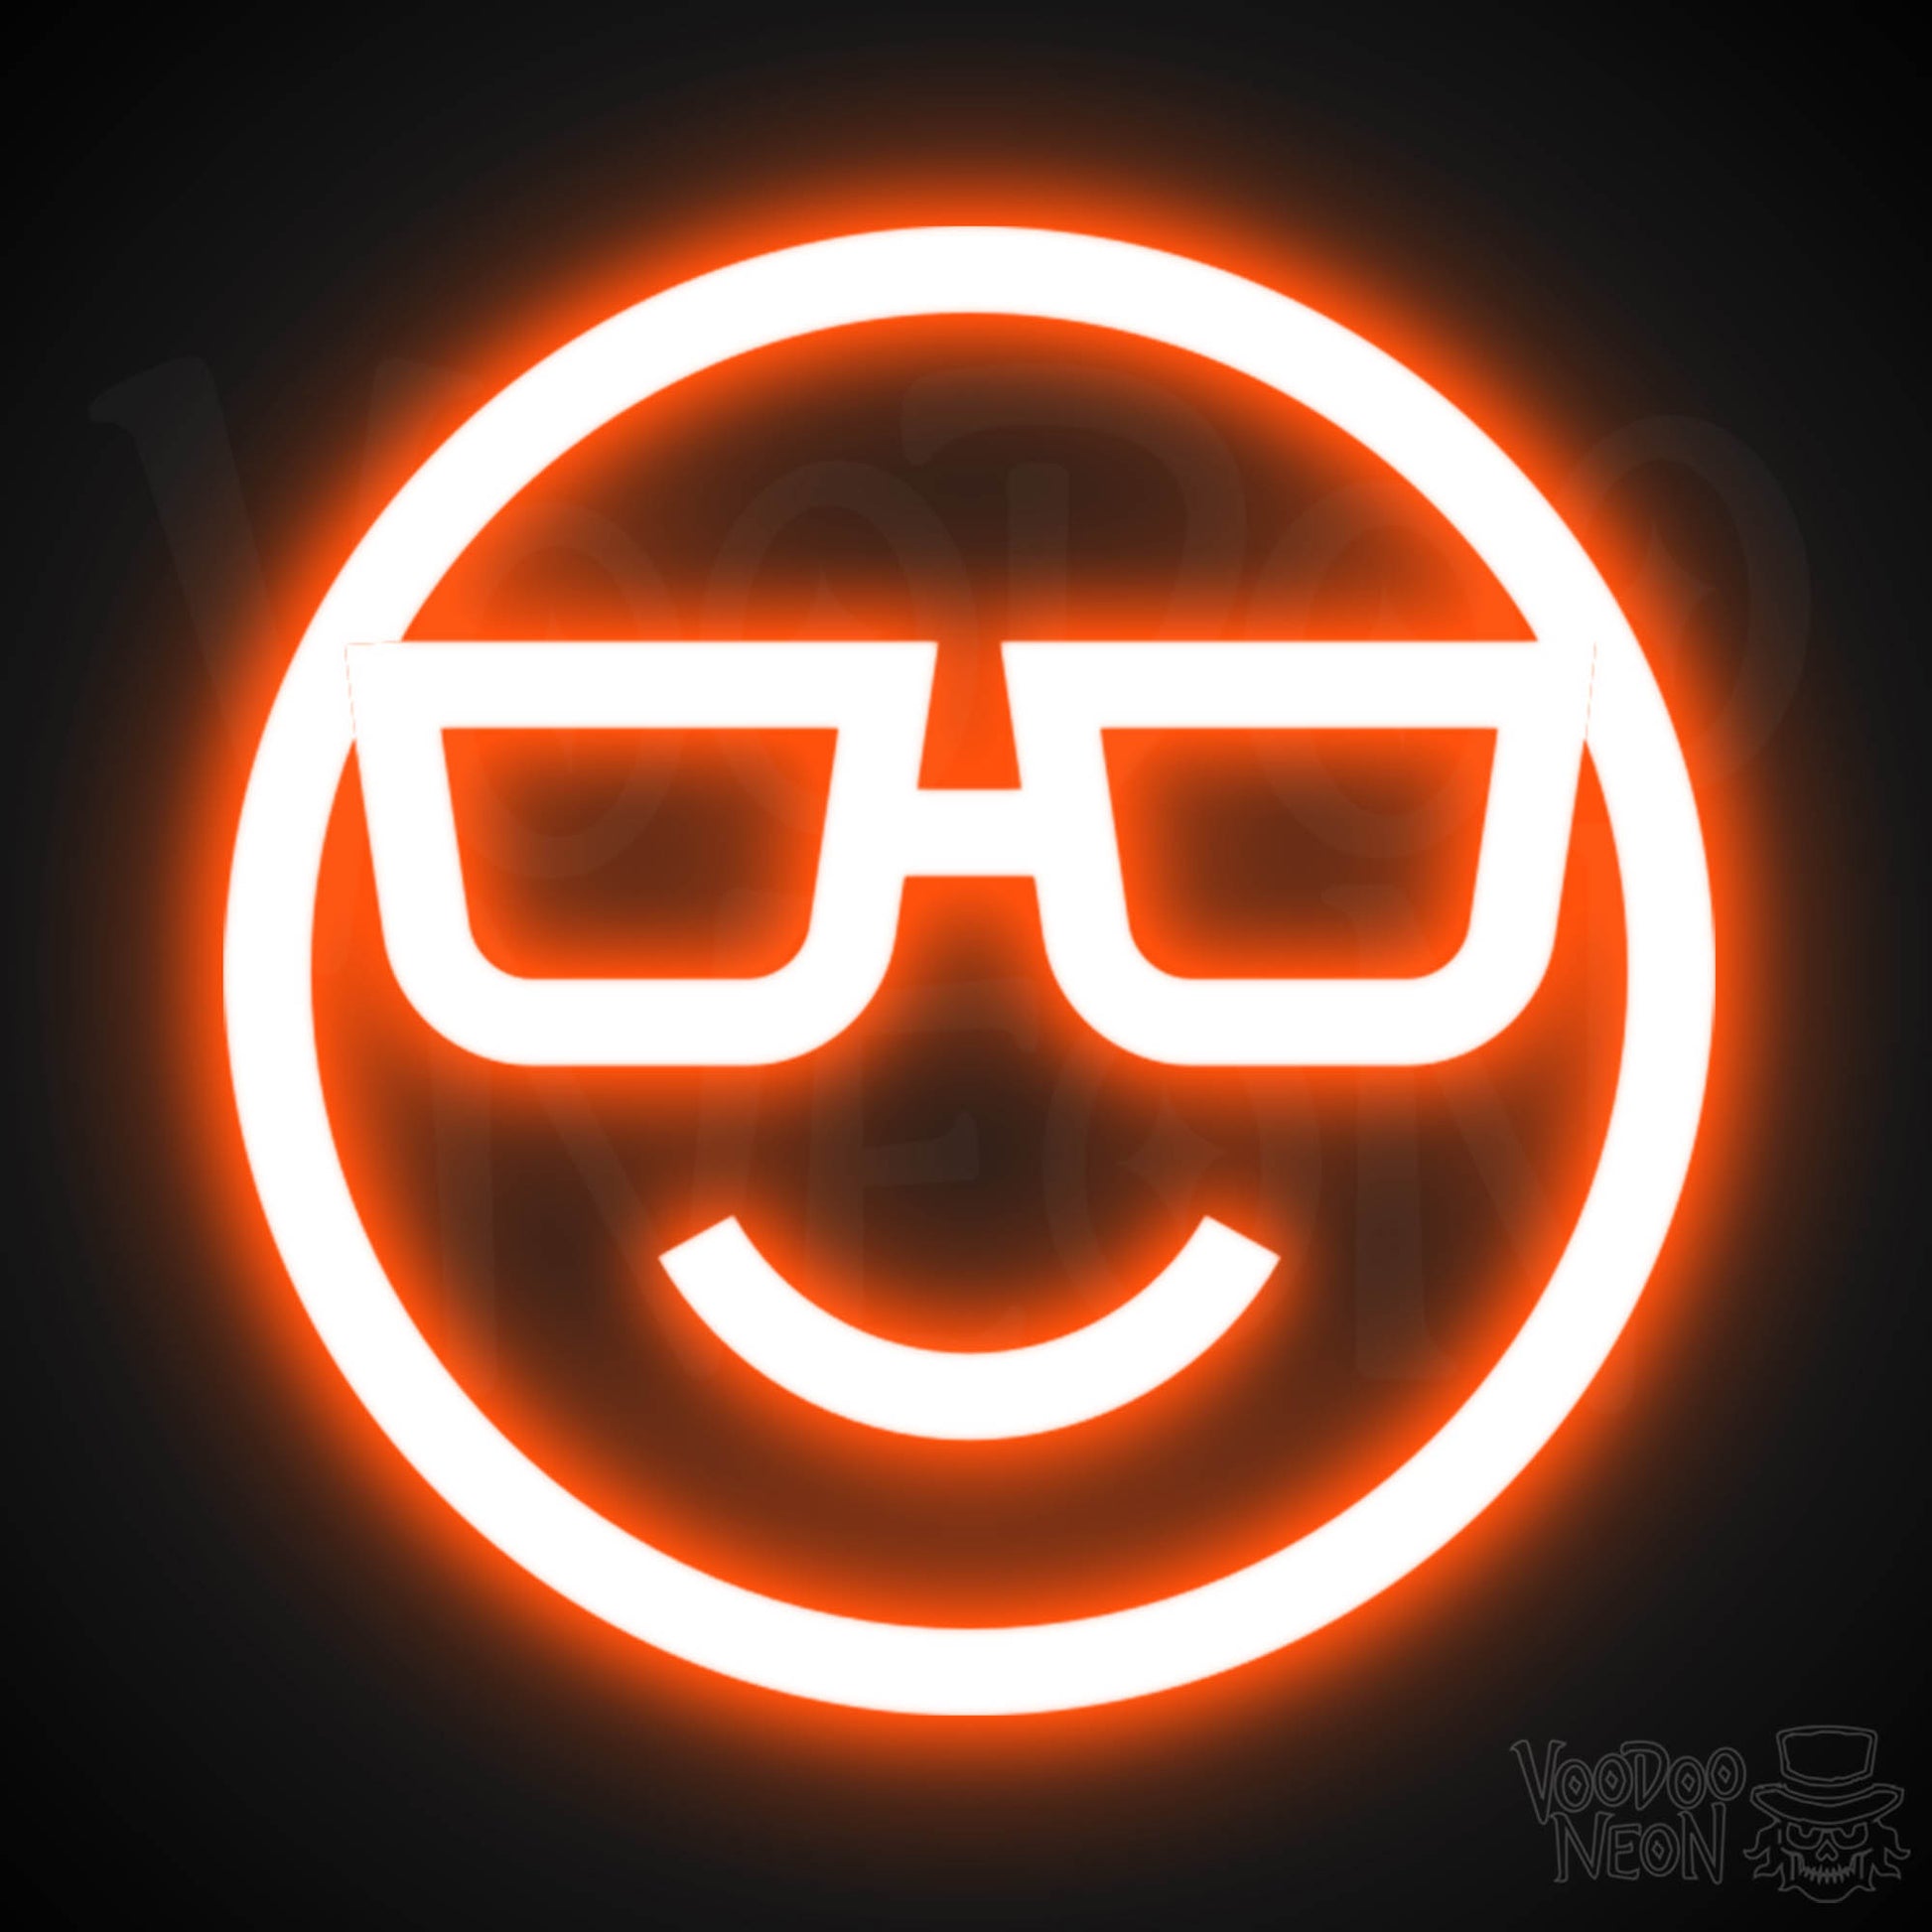 Neon Smiley Face - Smiley Face Neon Sign - LED Wall Art - Color Orange